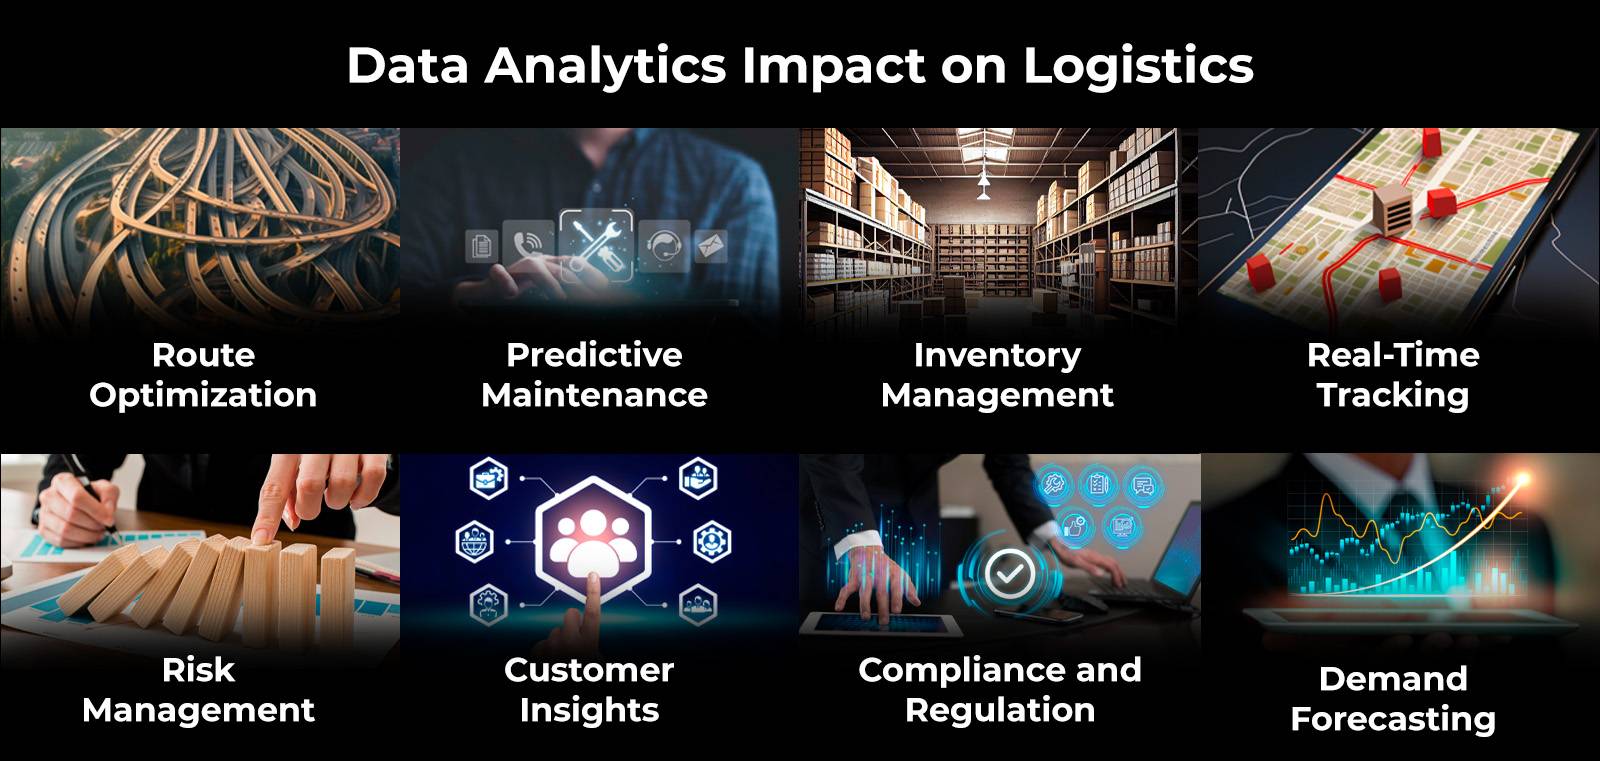 Data analytics impact on logistics